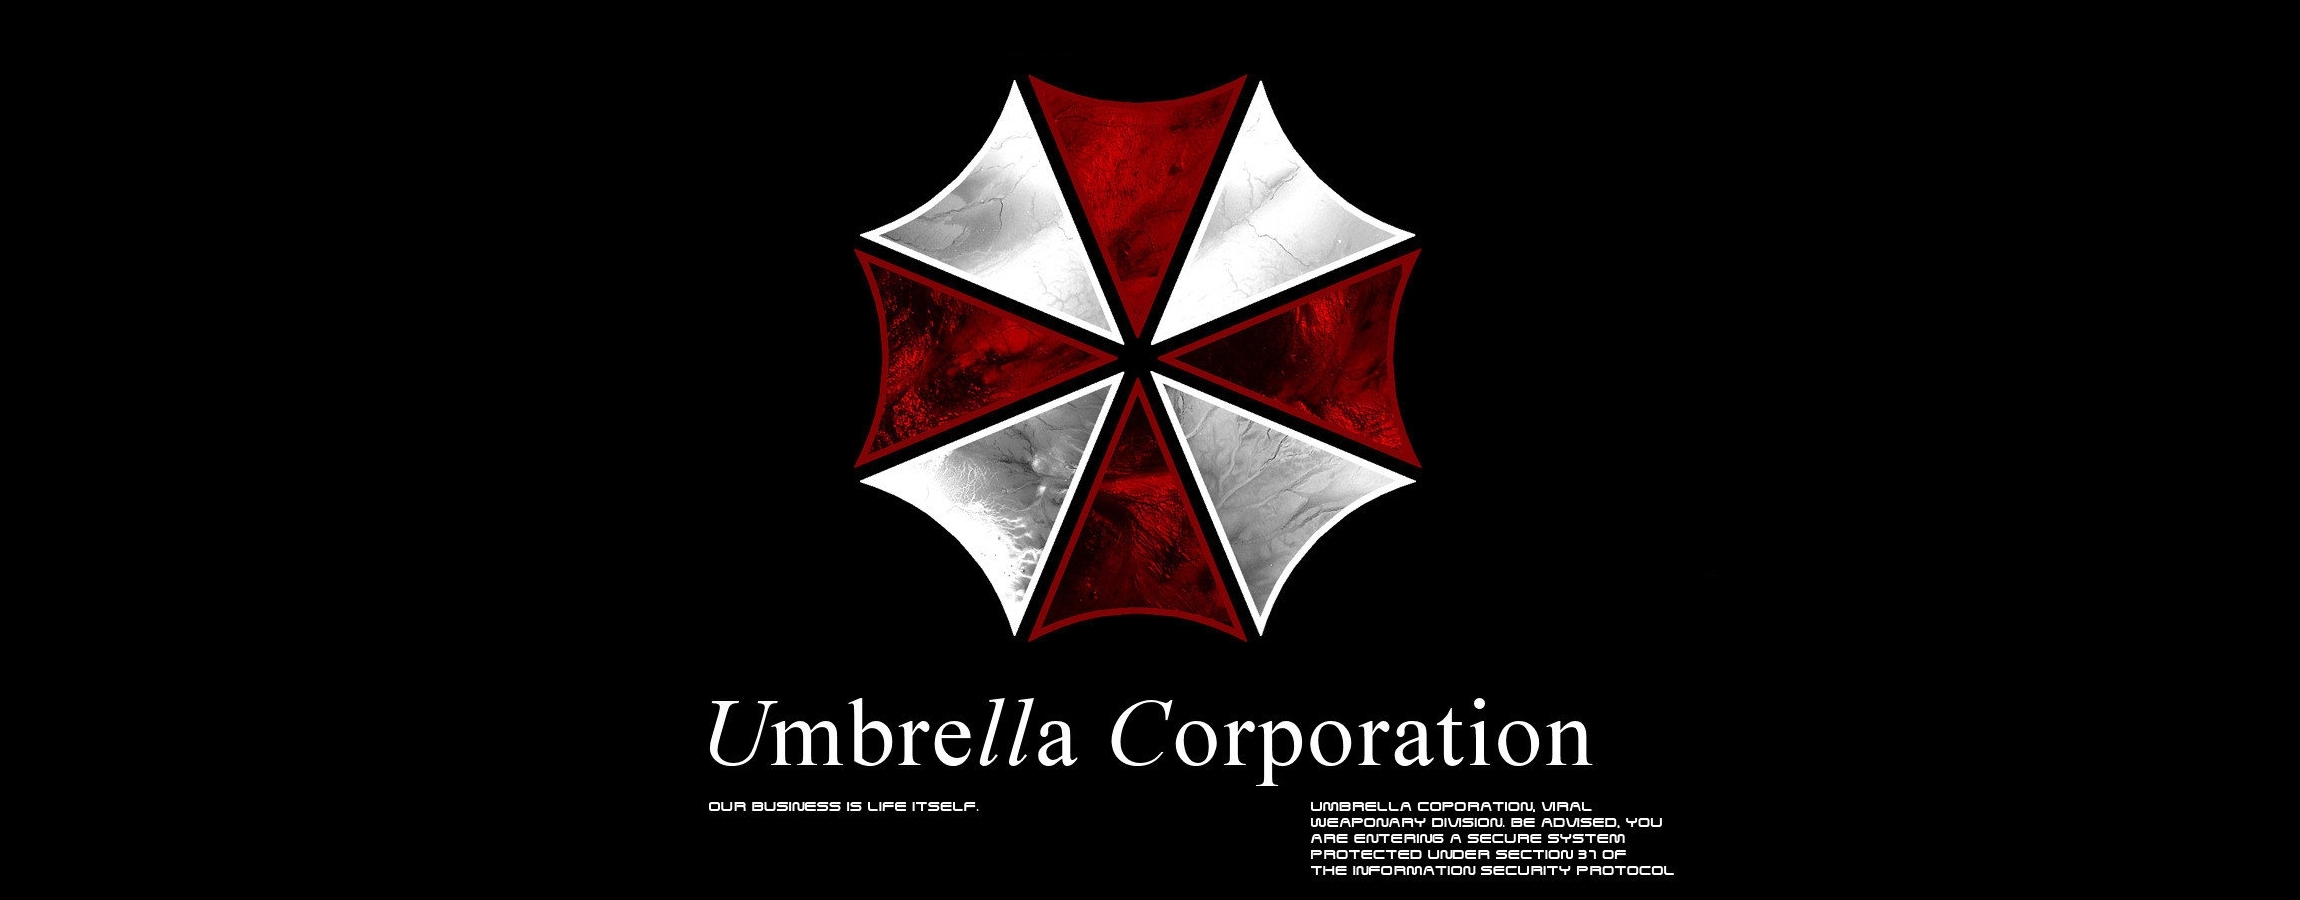 Capcom registreert handelsnaam “Umbrella Corps”